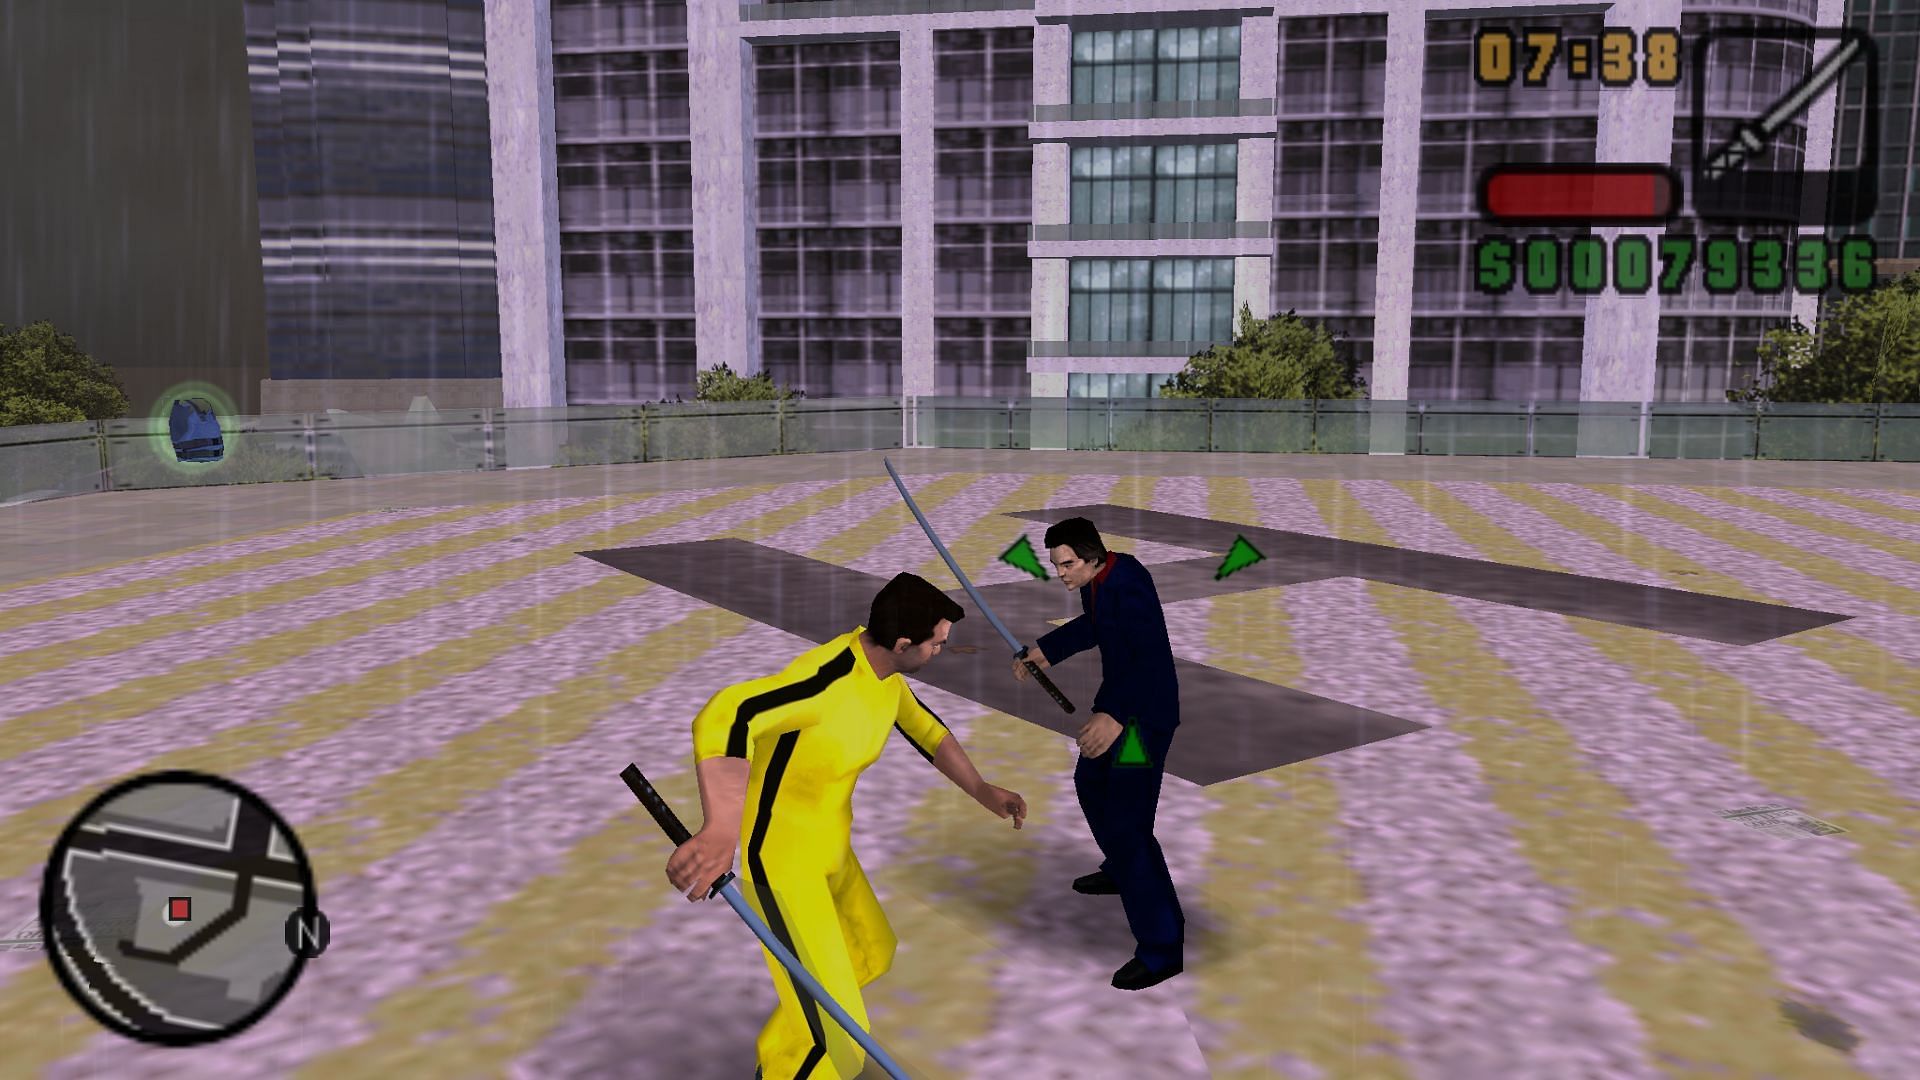 Toni in a sword fight with Kazuki (Image via GTA Wiki)